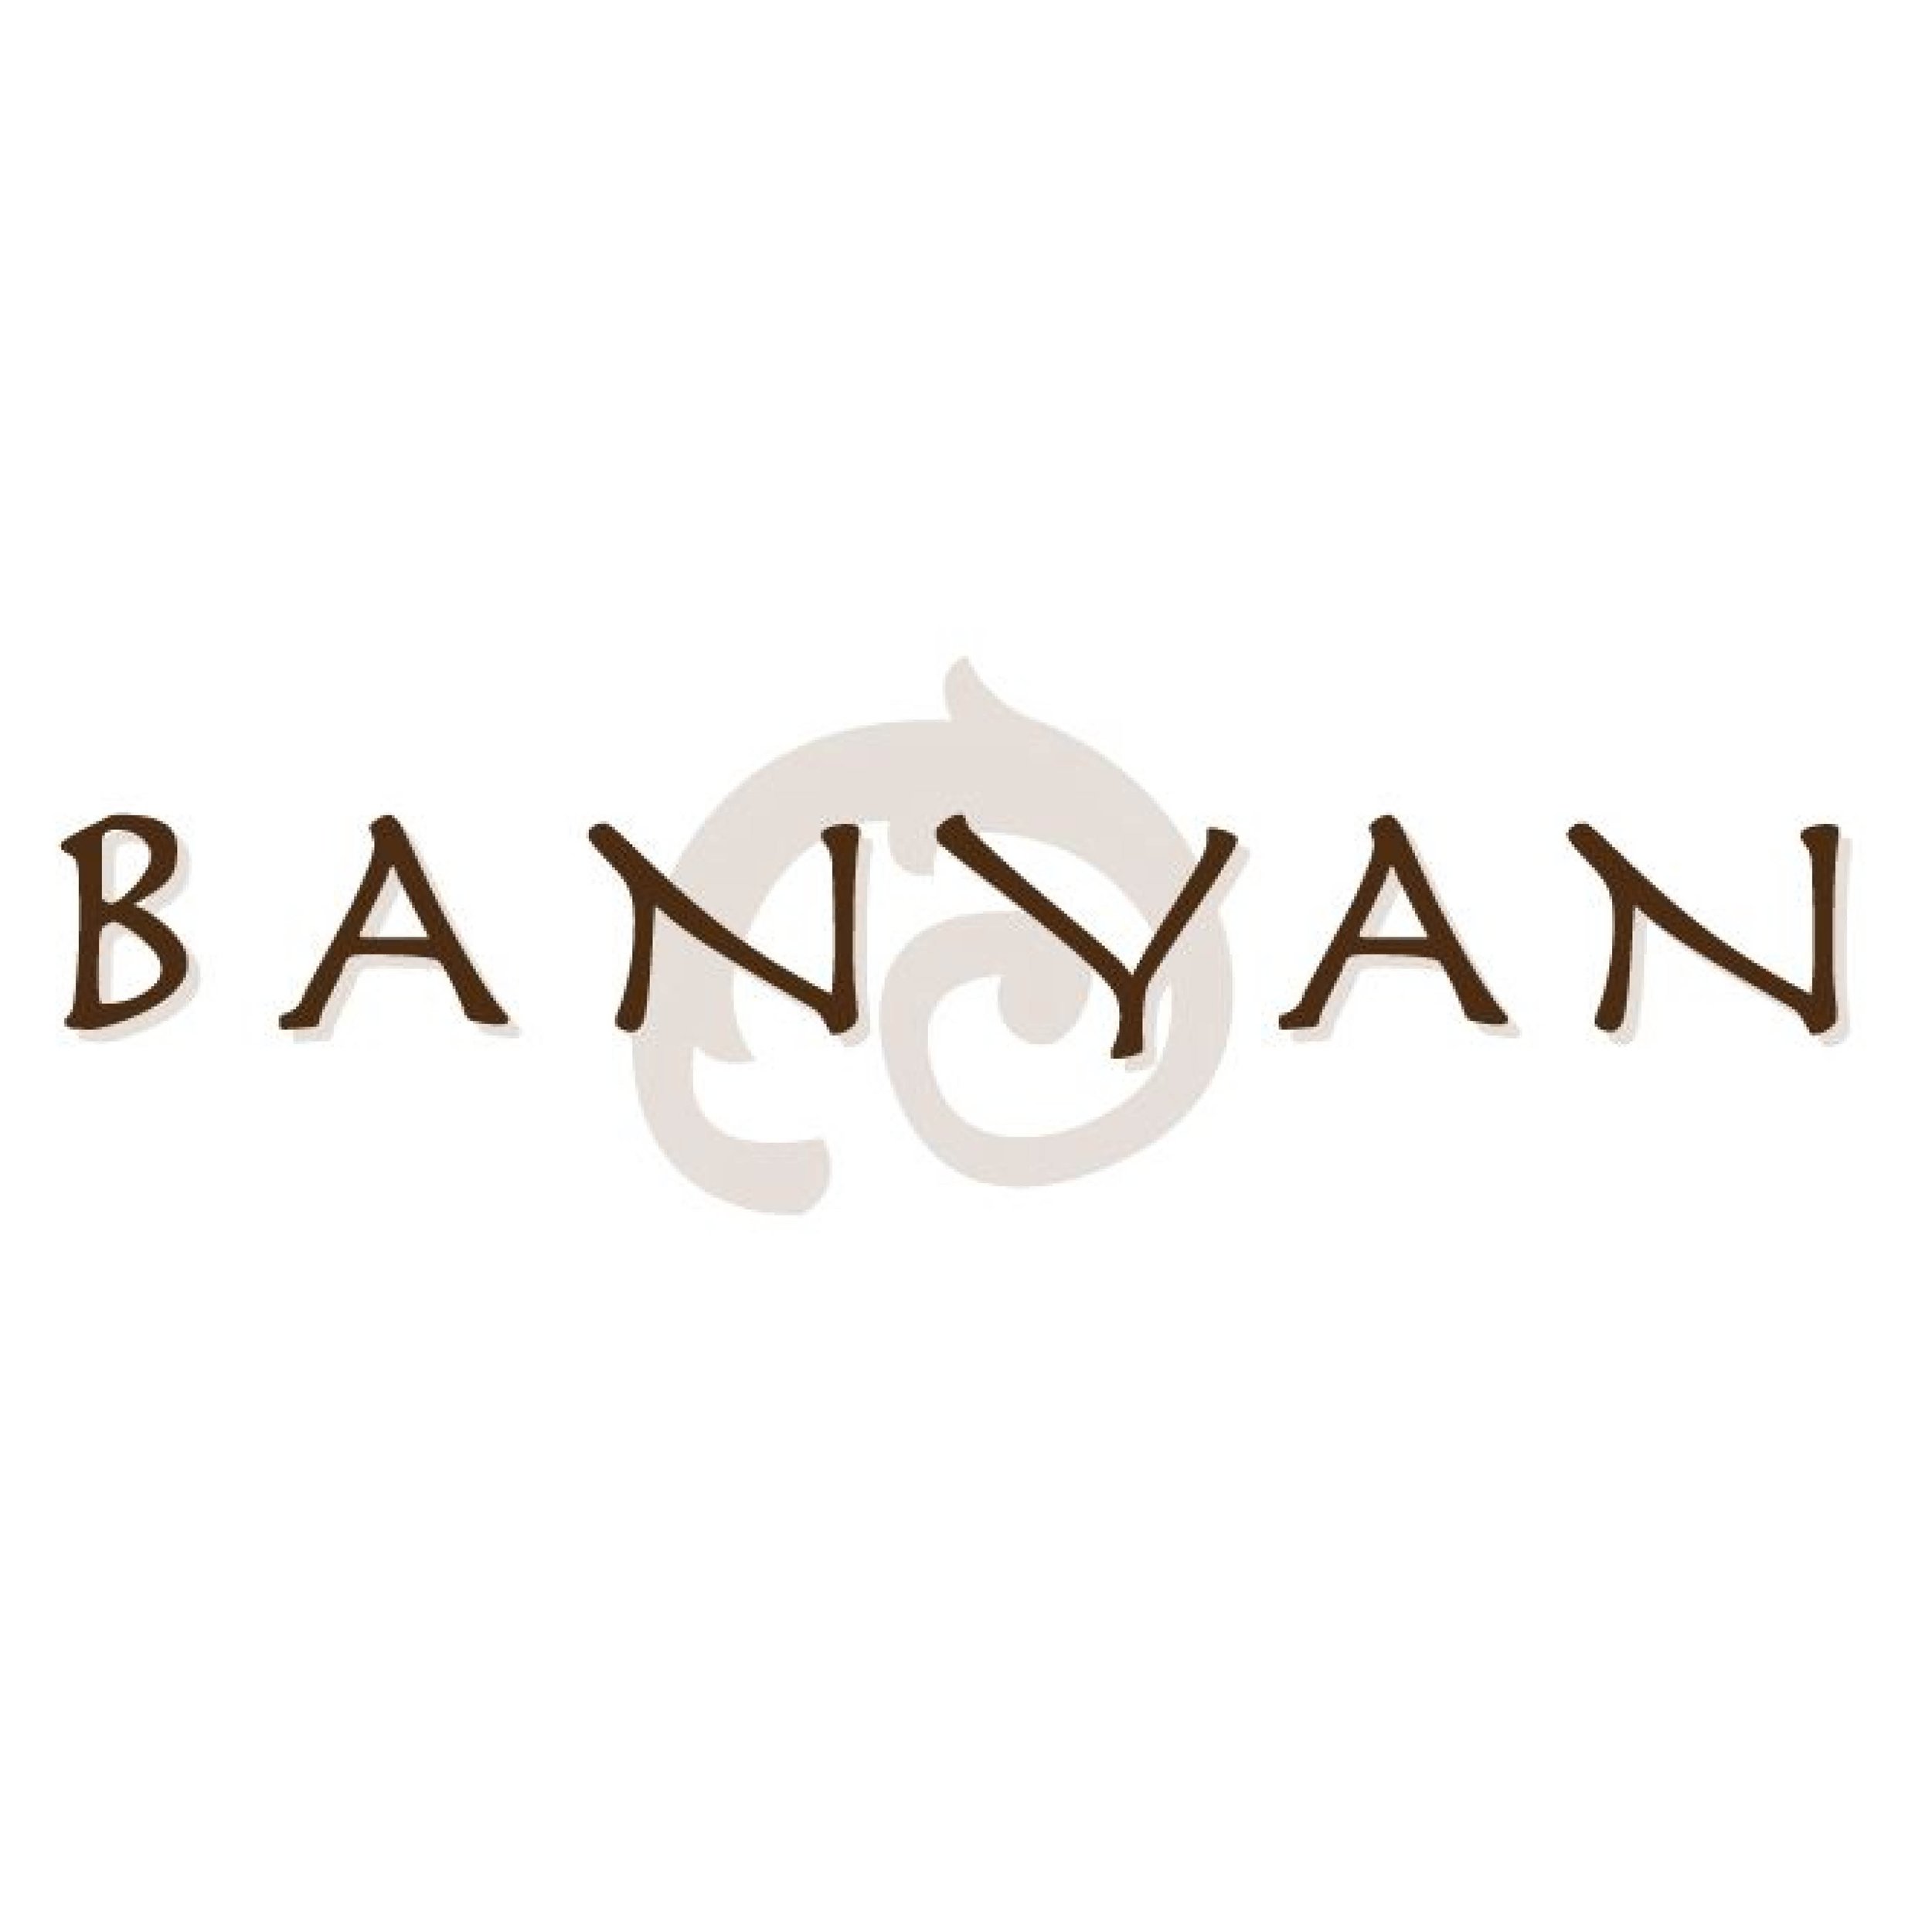 Banyan tiles.jpg